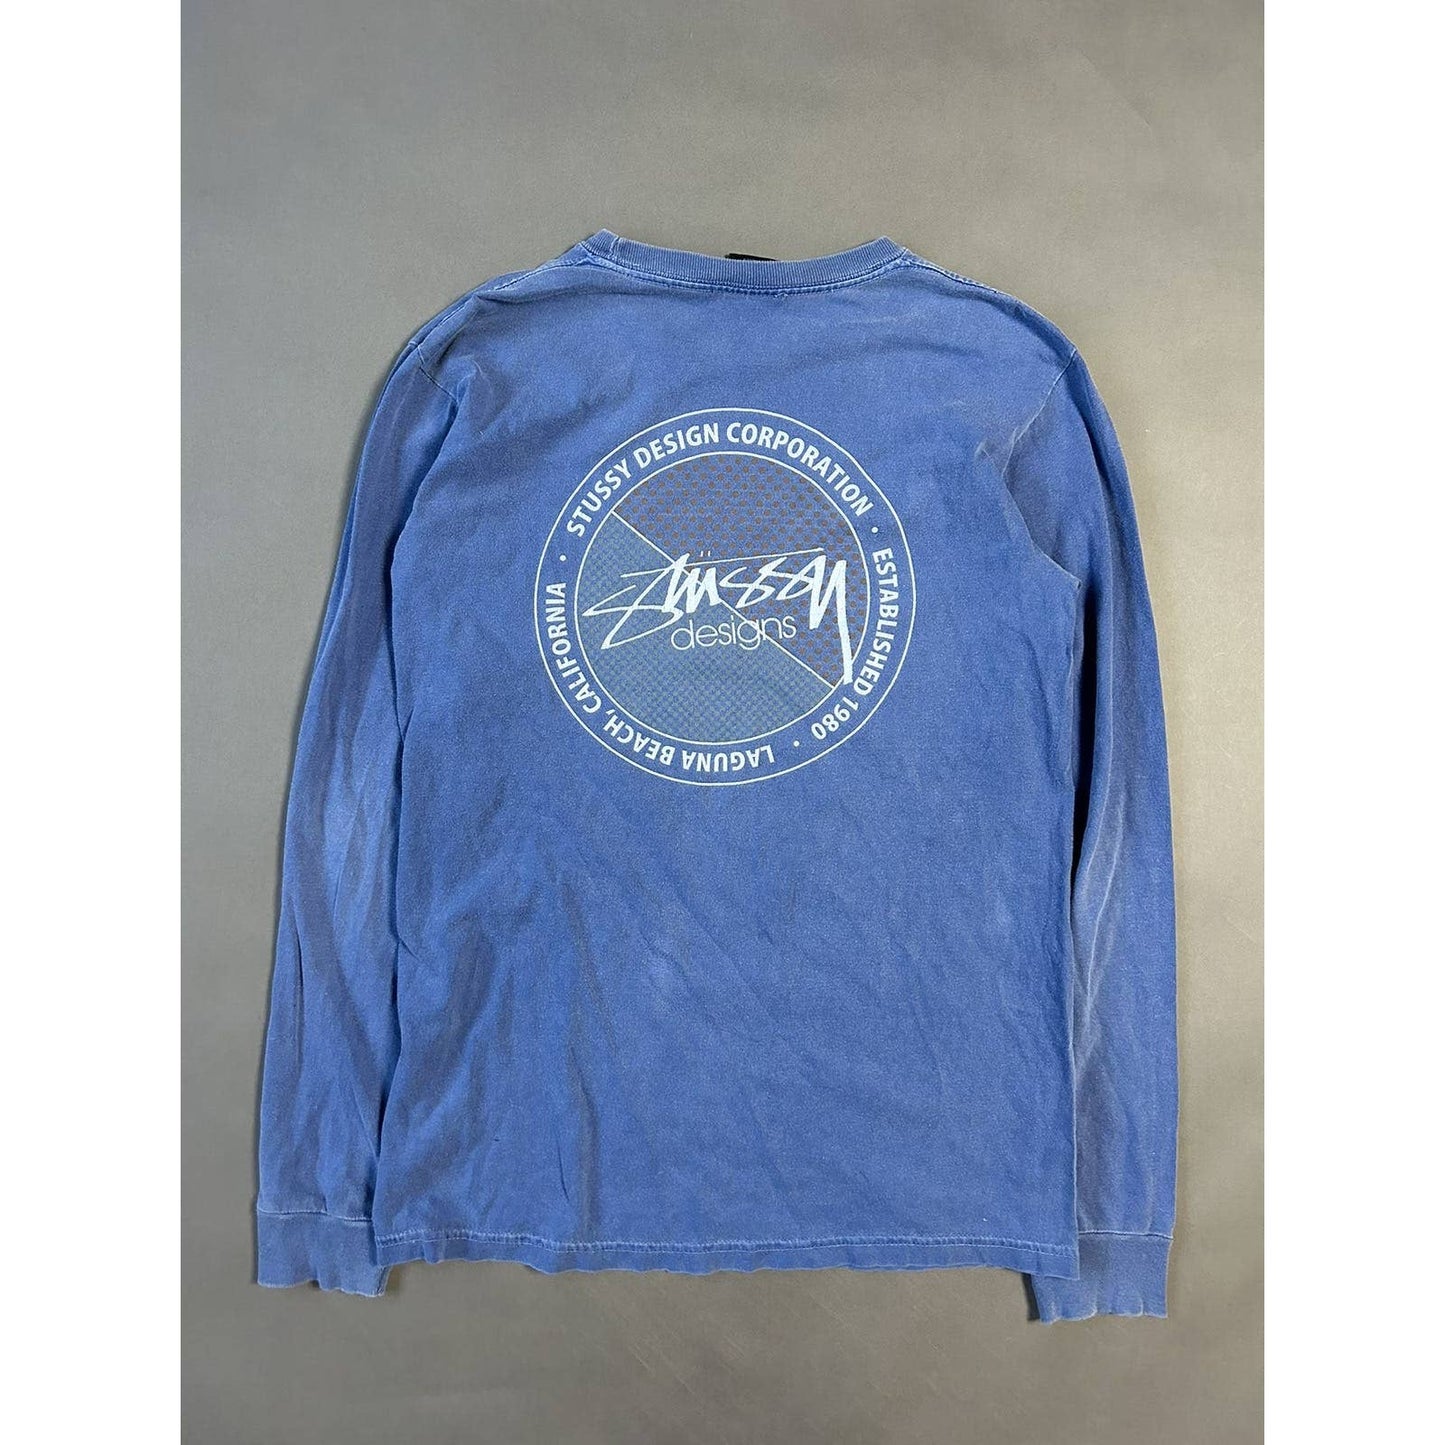 Stussy t-shirt big logo blue vintage long sleeve